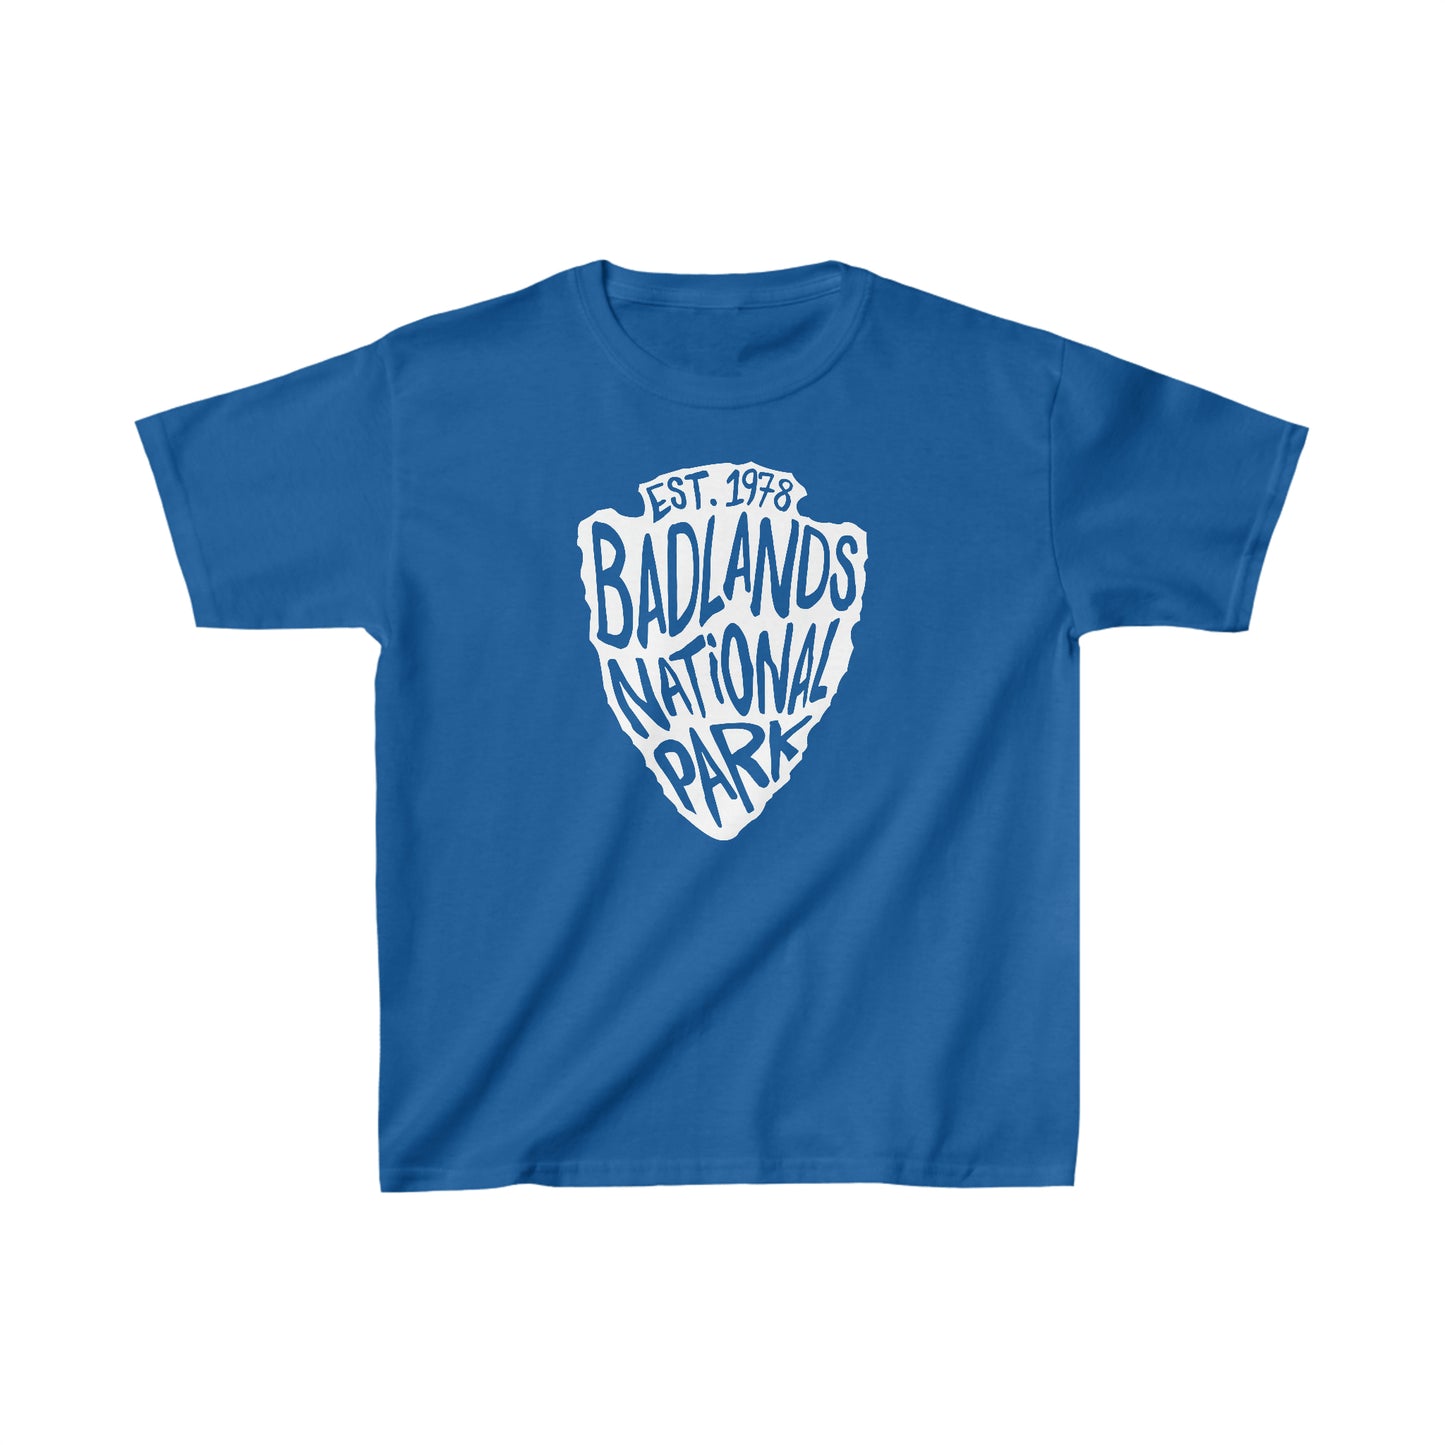 Badlands National Park Child T-Shirt - Arrowhead Design